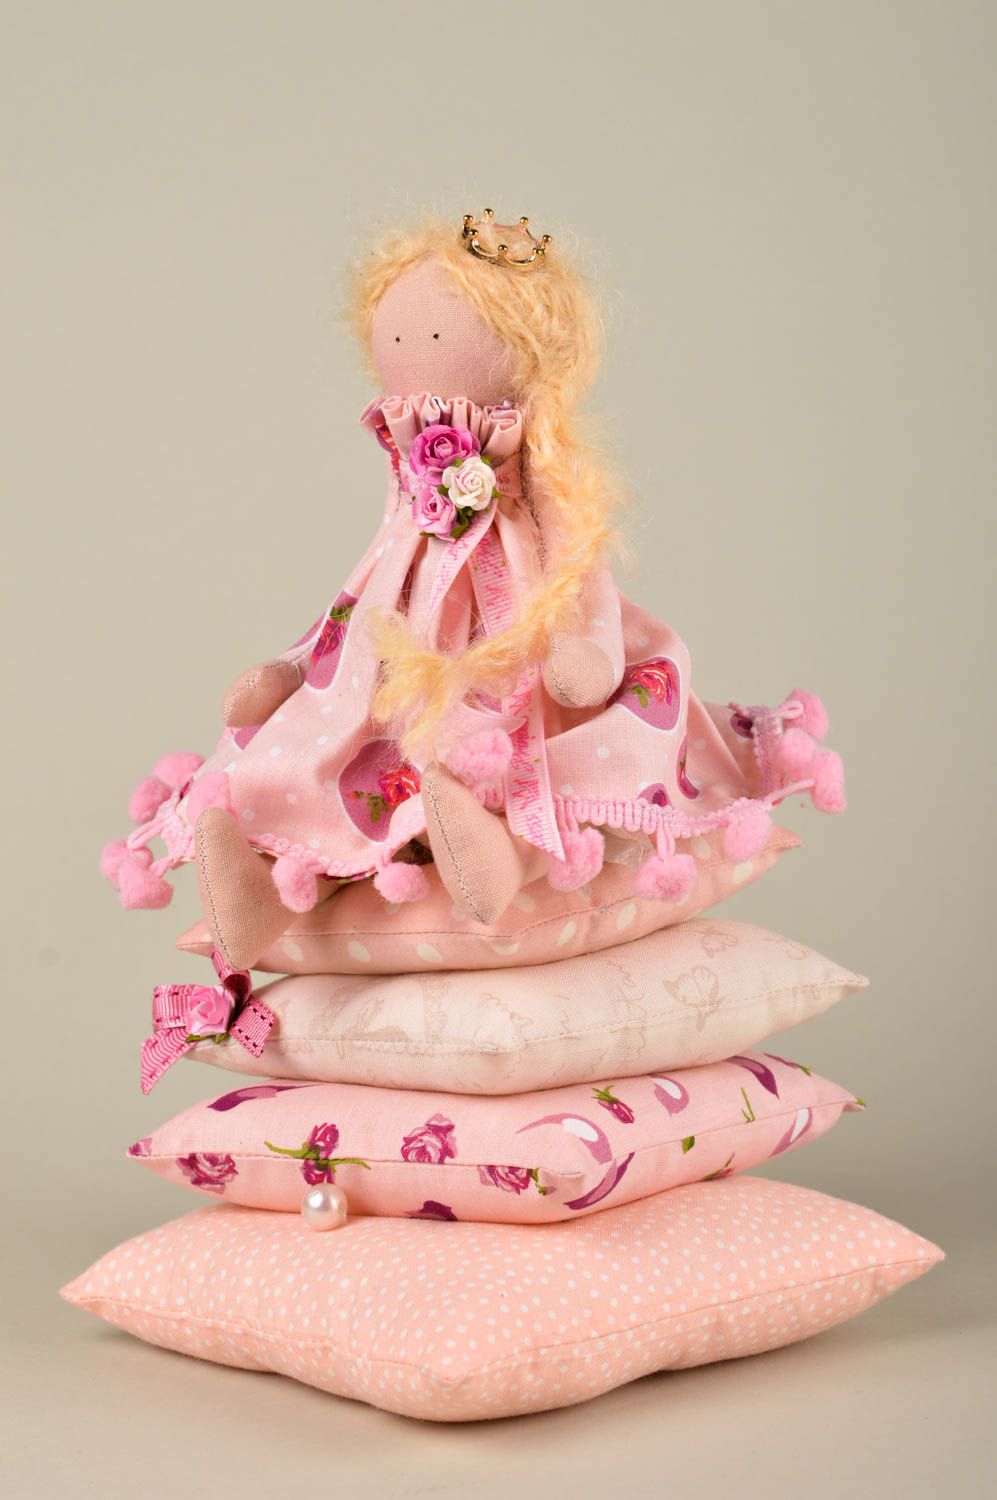 Handmade doll unusual doll gift ideas designer soft toy gift for children photo 1